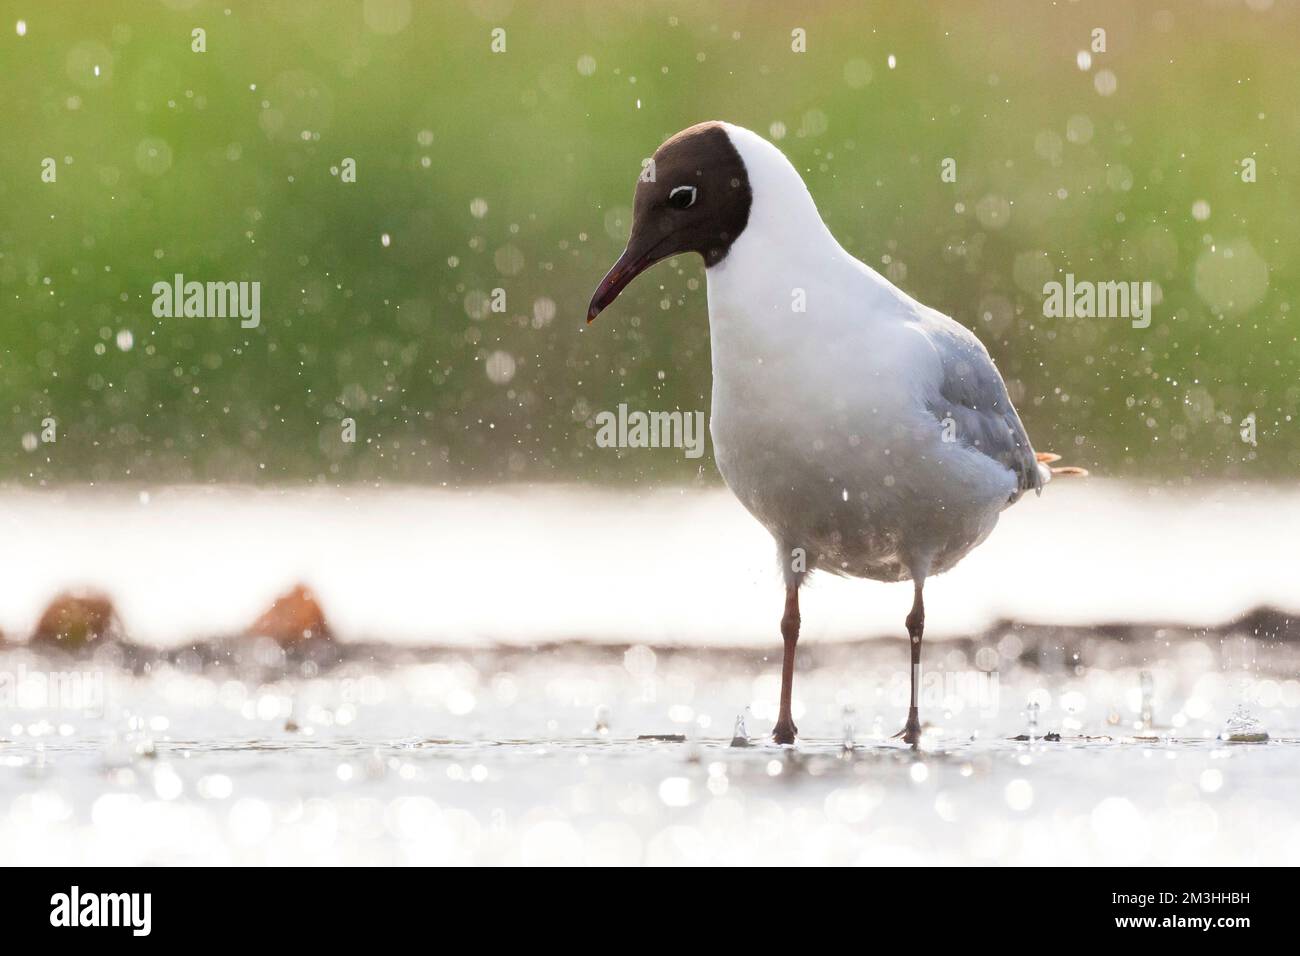 Kokmeeuw staand in regen; Common Black-headed Gull standing in rain shower Stock Photo